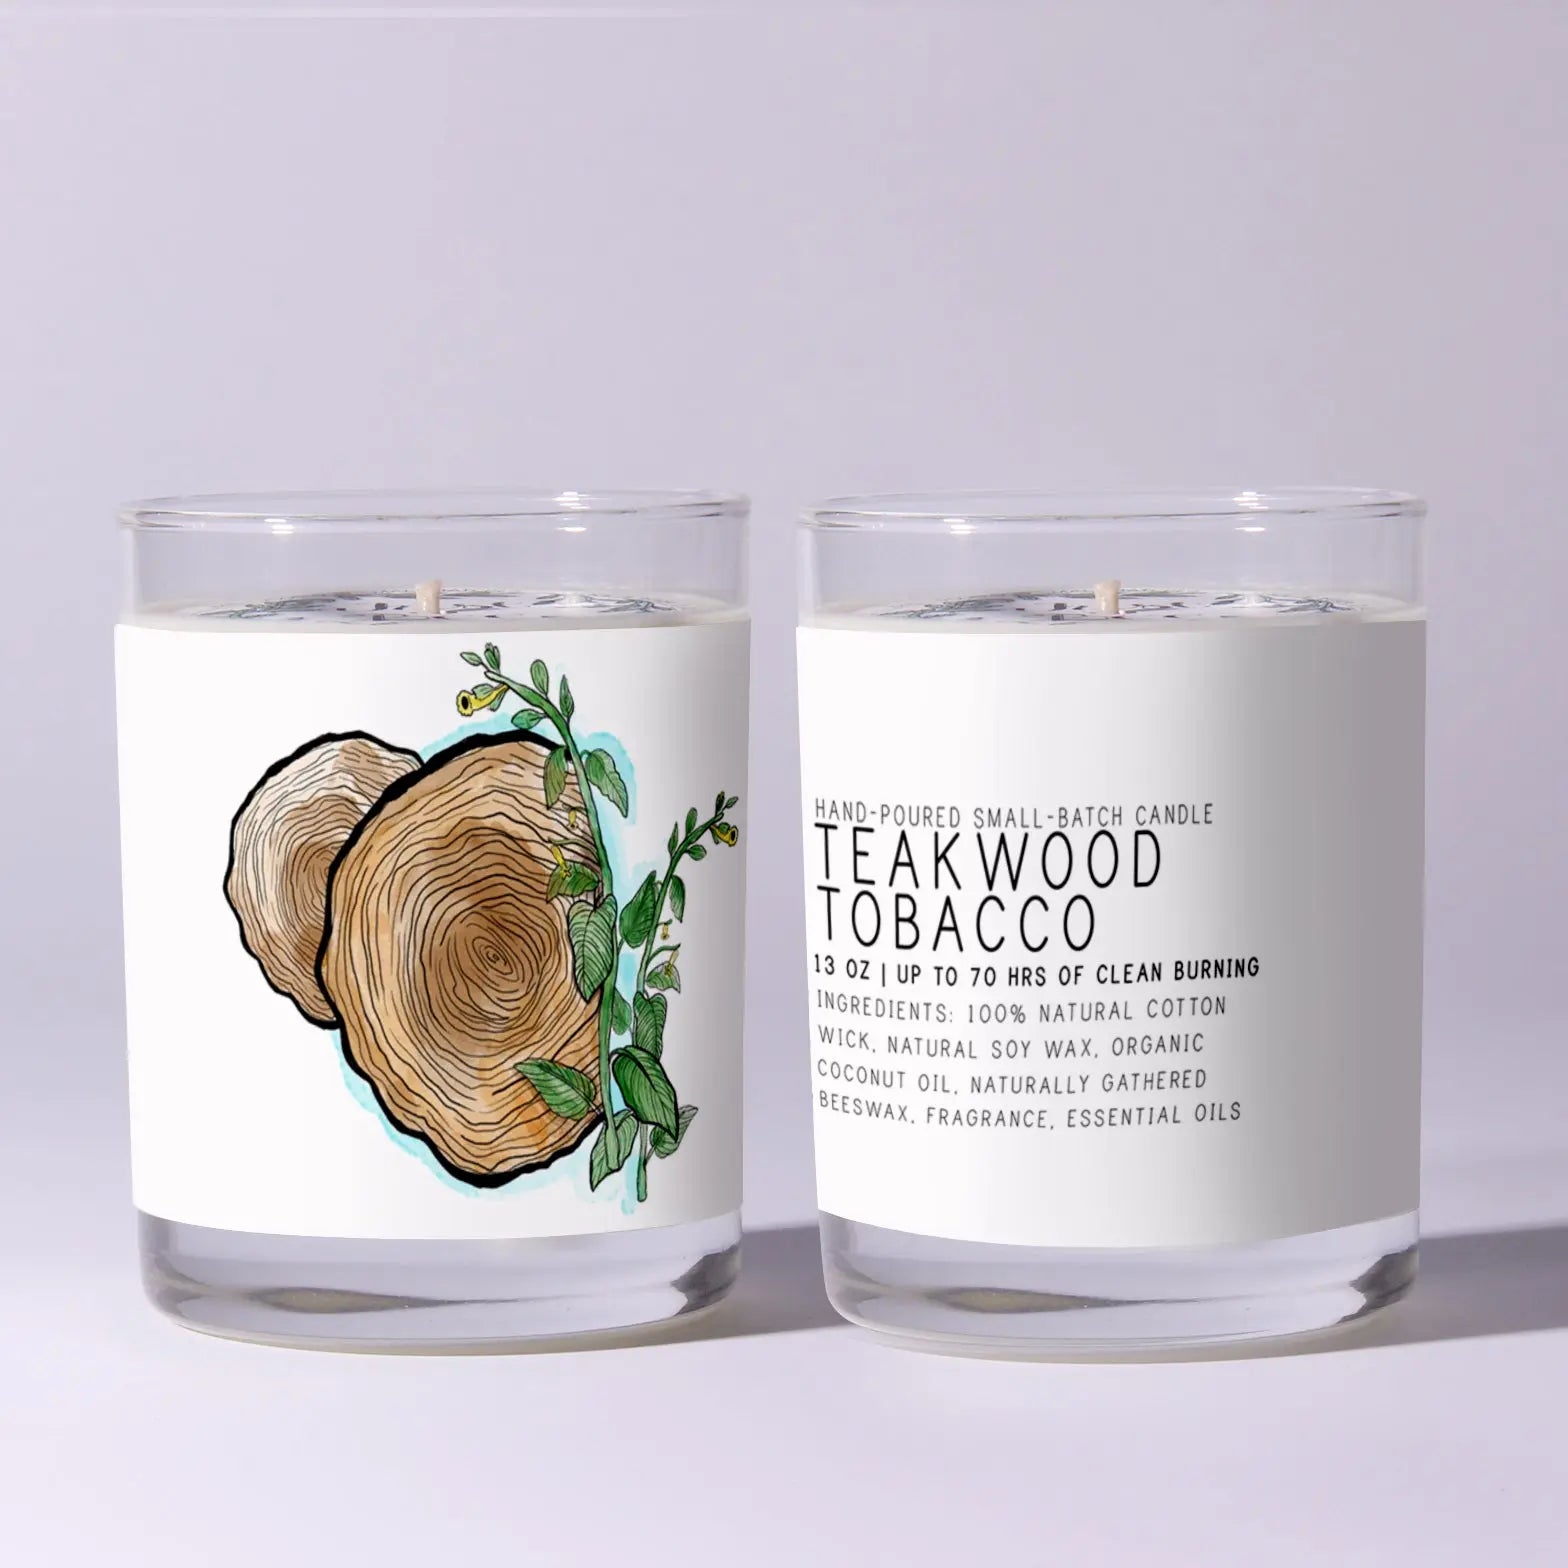 Mahogany Teakwood Candle, Small Batch Soy